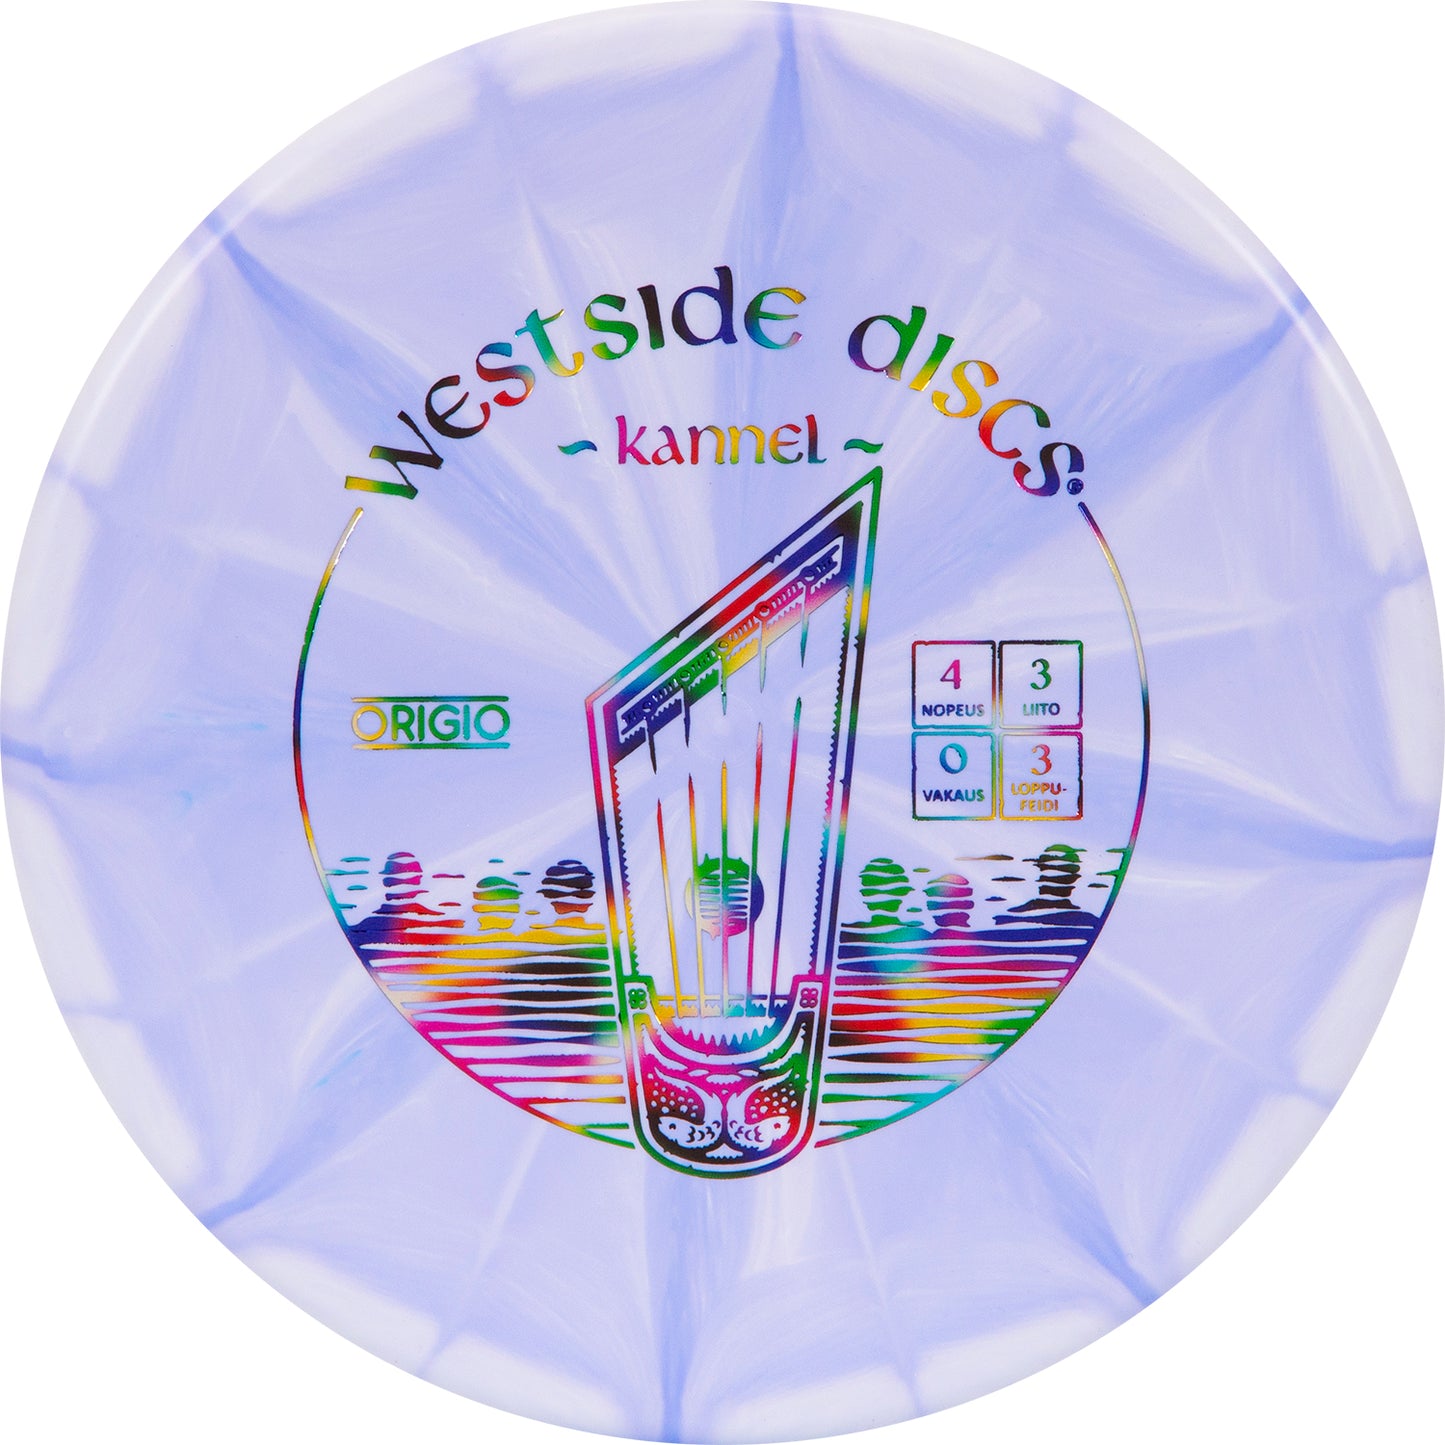 Westside Discs Origio Burst Harp Finnish Stamp